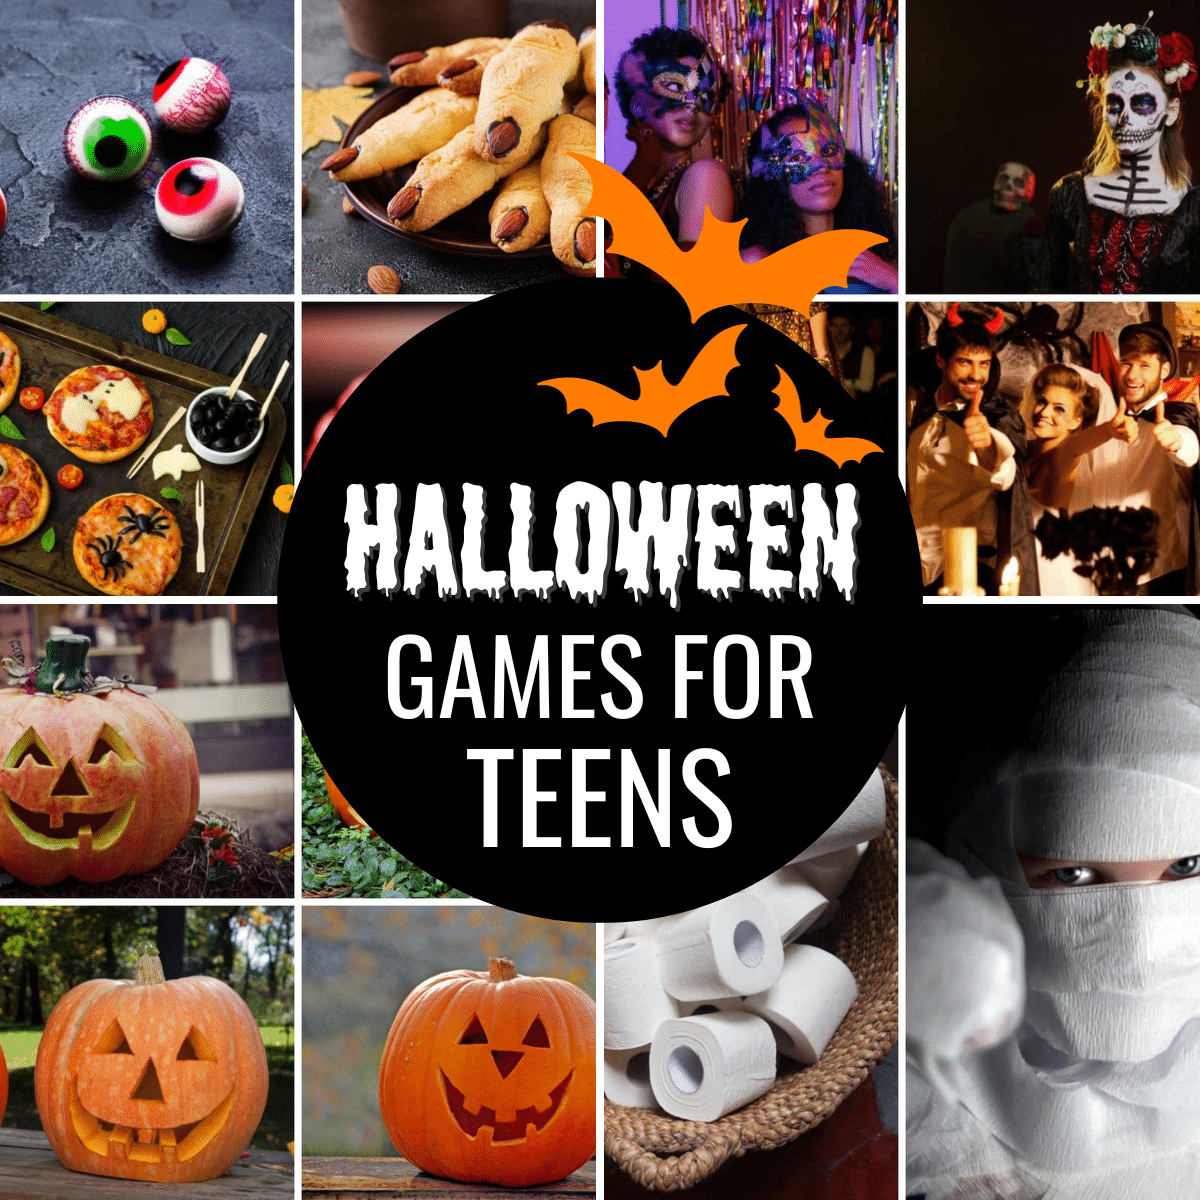 Halloween games for teens